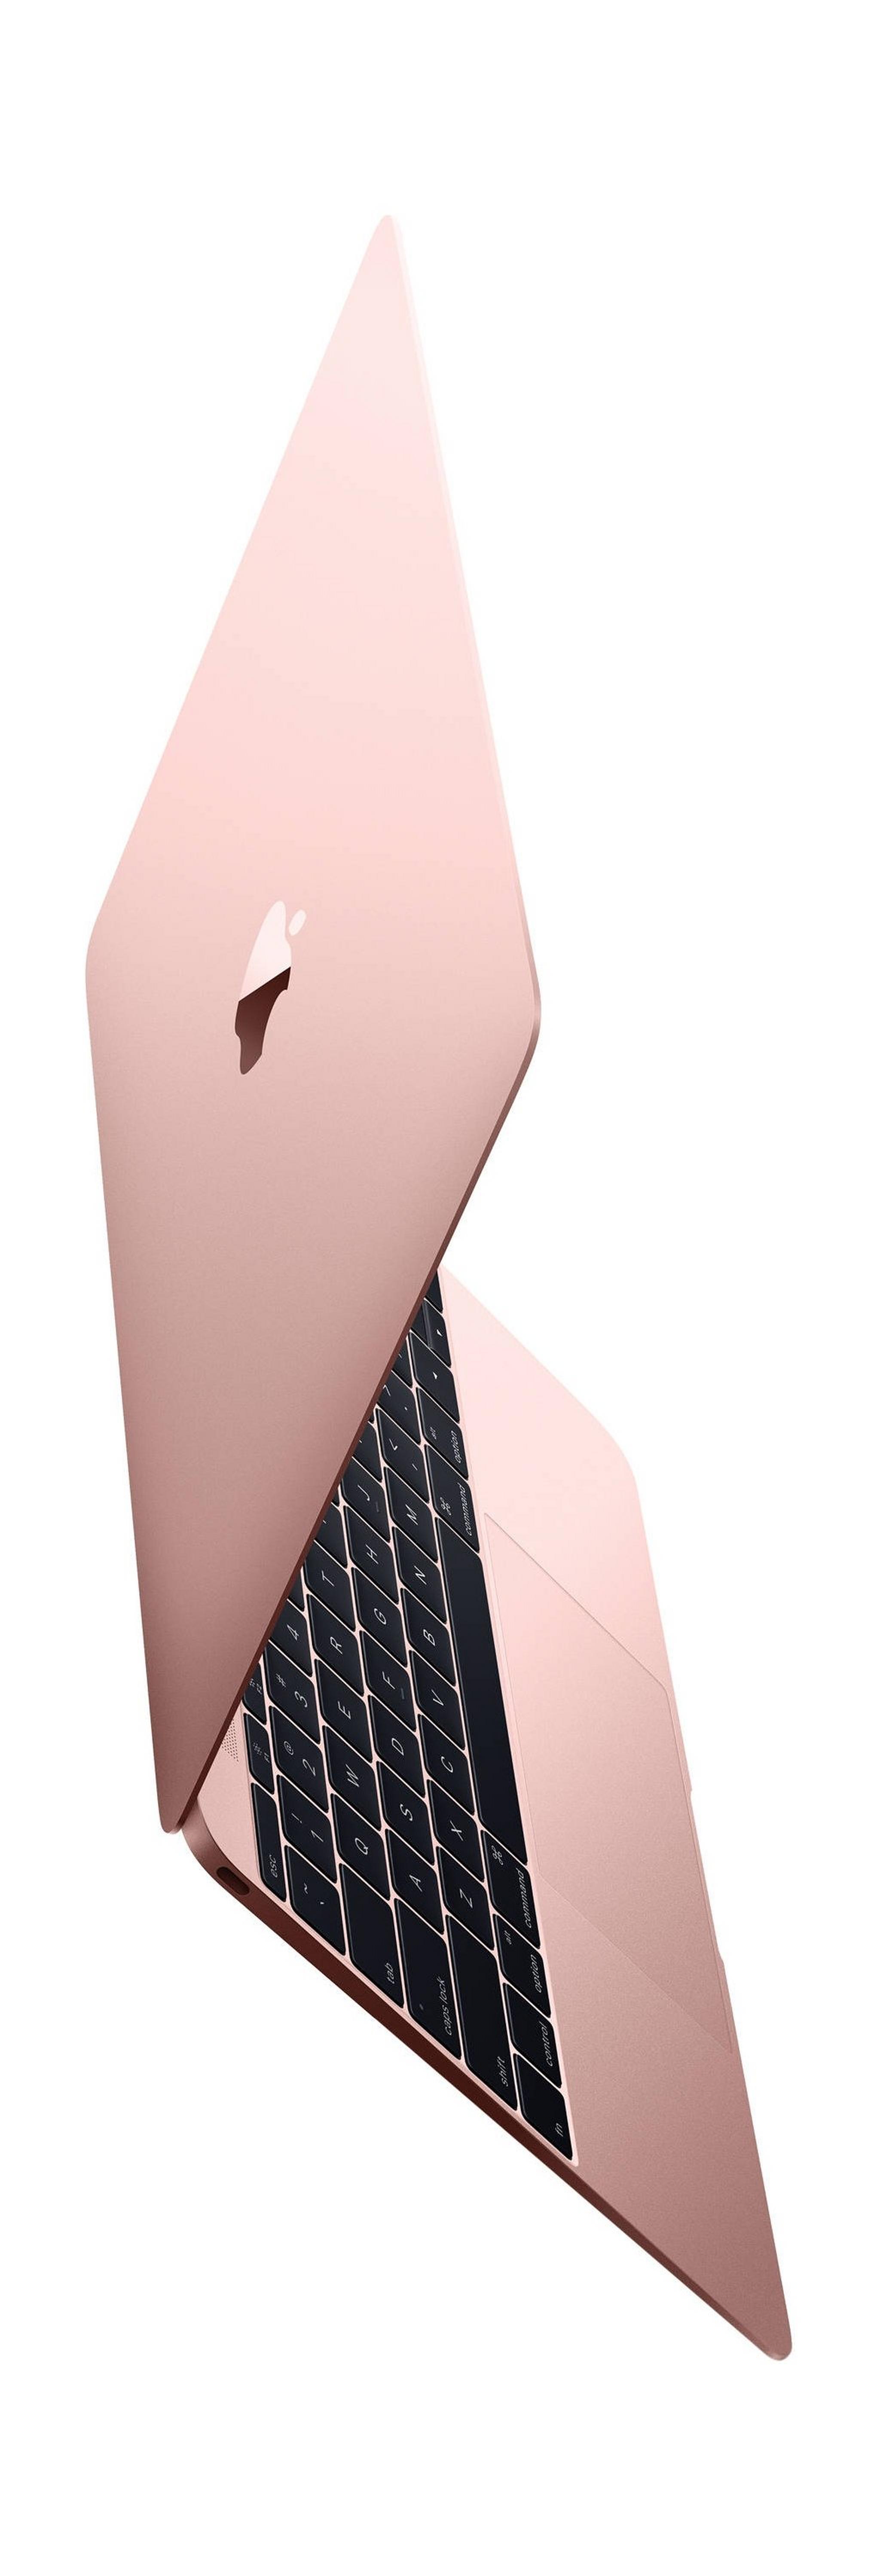 Apple MacBook Core-m3 8GB RAM 256GB SSD 12-inch Laptop (MNYM2AE/A) - Rose Gold